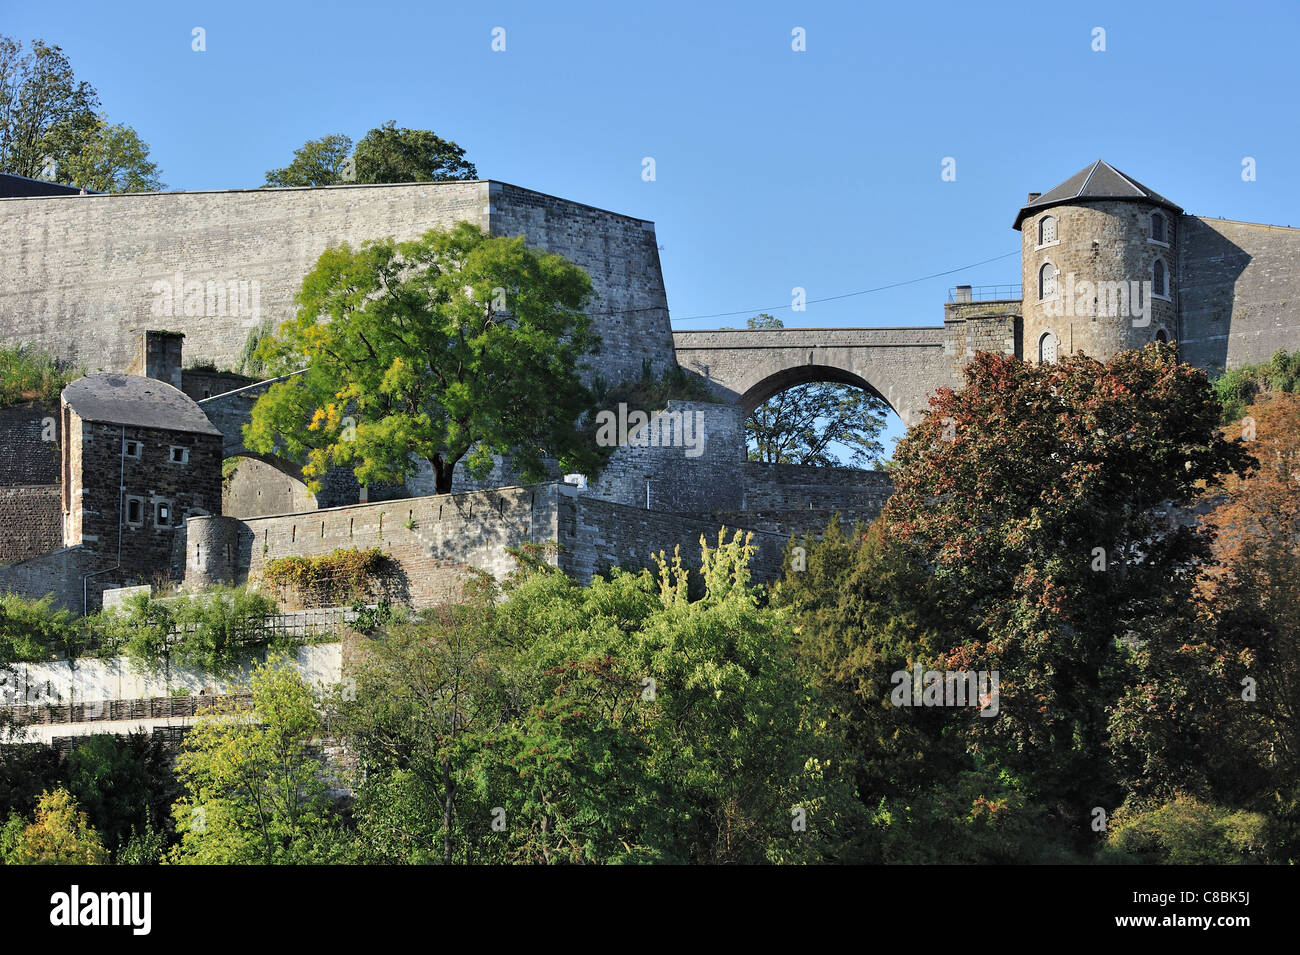 The Citadel / Castle of Namur along the river Meuse, Belgium Stock Photo